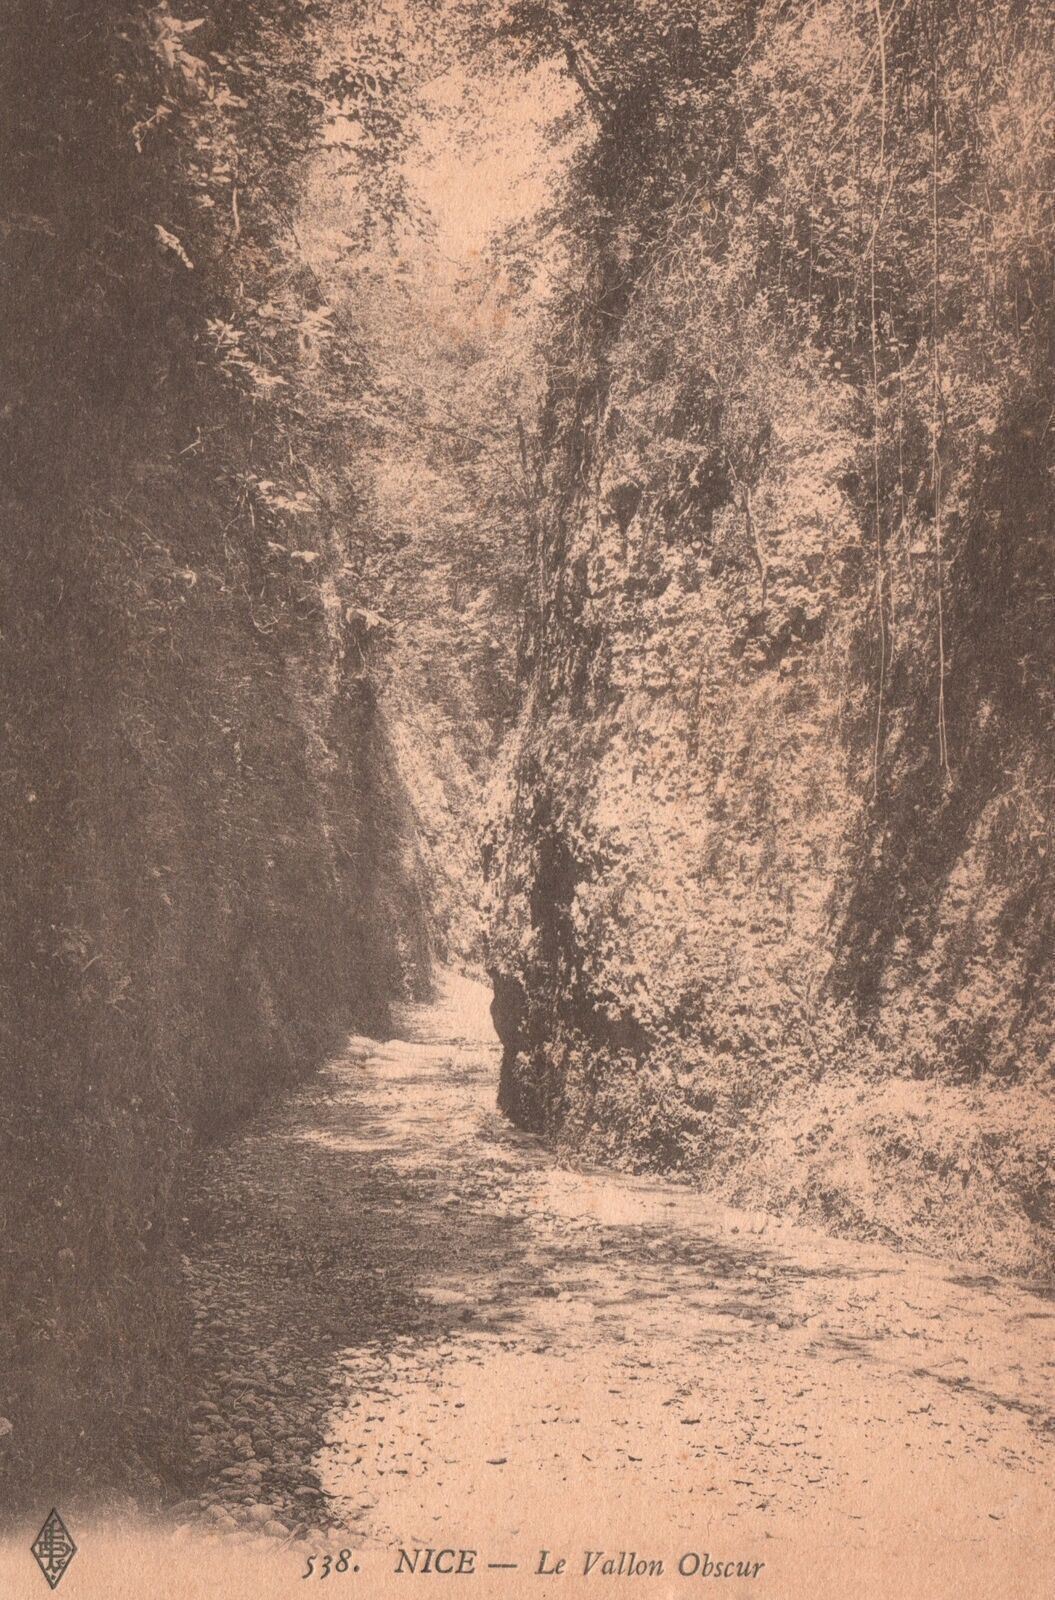 Le Vallon Obscur Pathways Between The Rocks Nice France Vintage Postcard